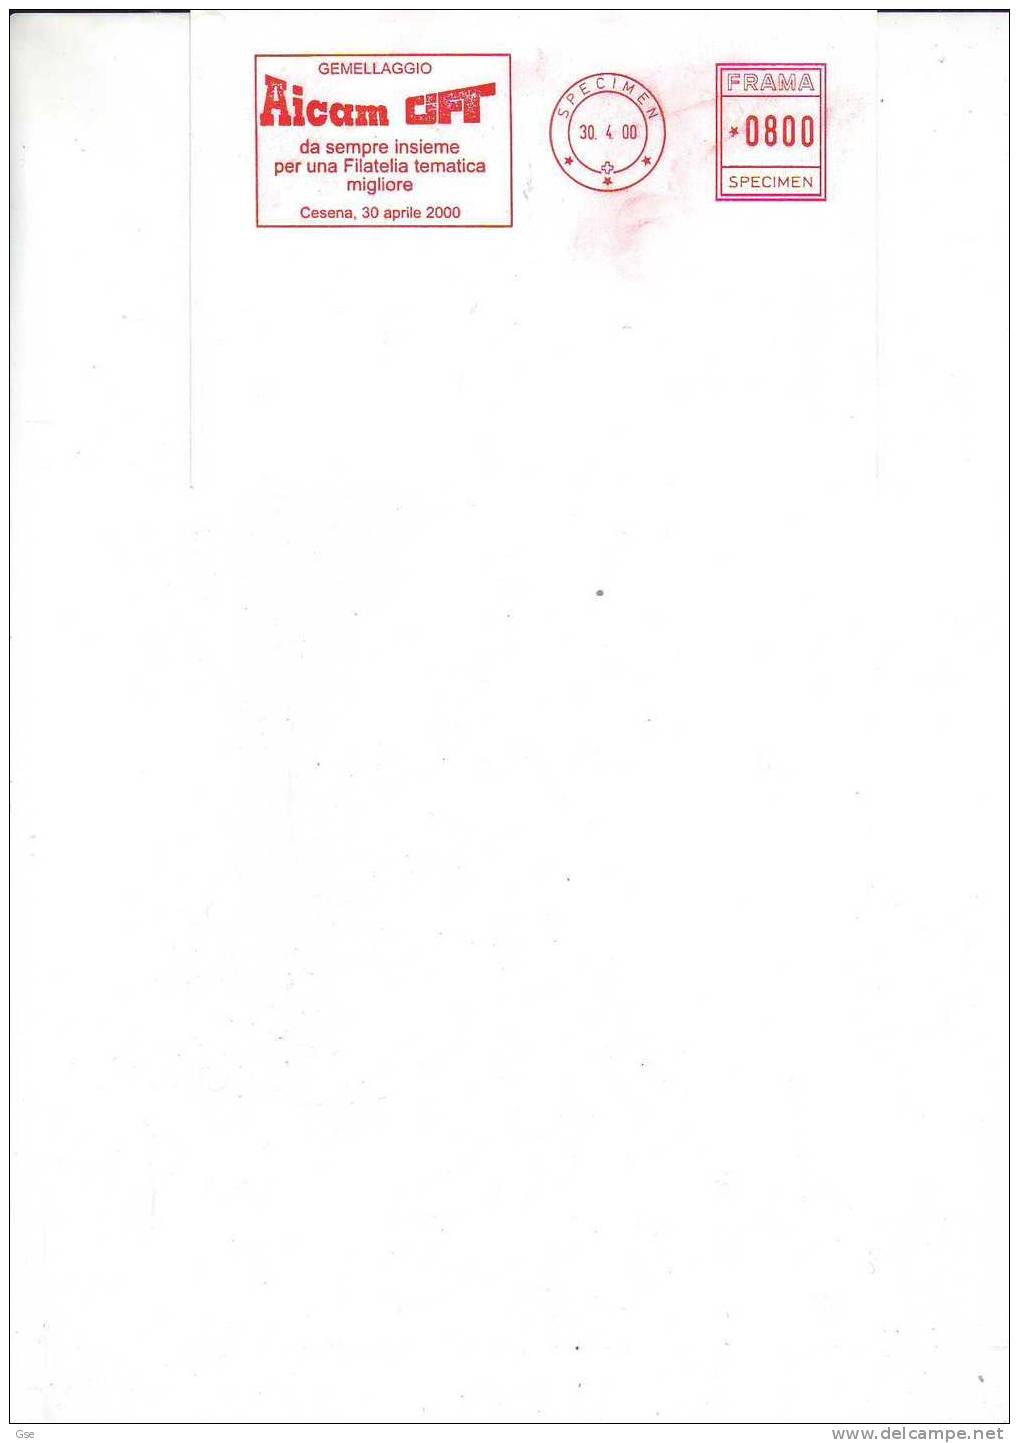 ITALIA 2000 - Cartolina "specimen" - AICAM-CIFT - Automaatzegels [ATM]